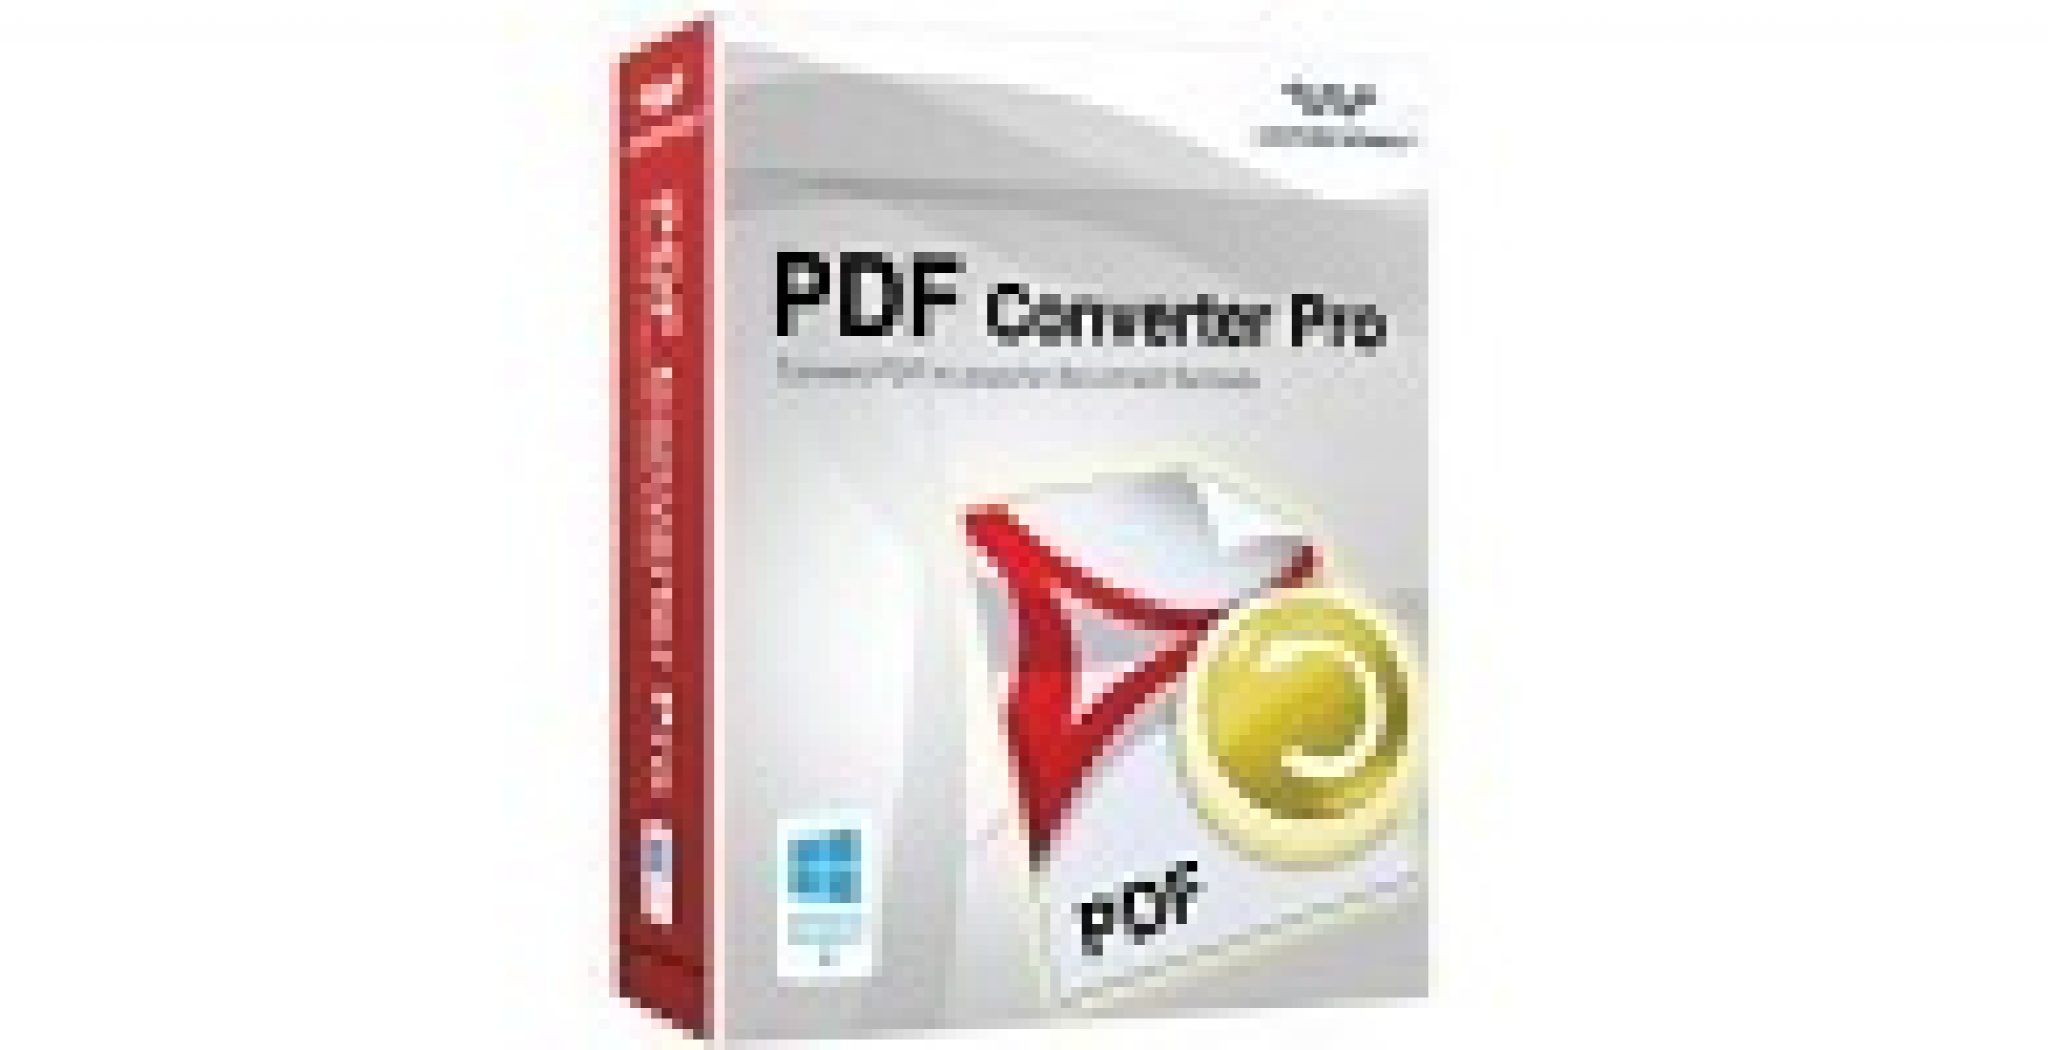 wondershare pdf converter pro gratis